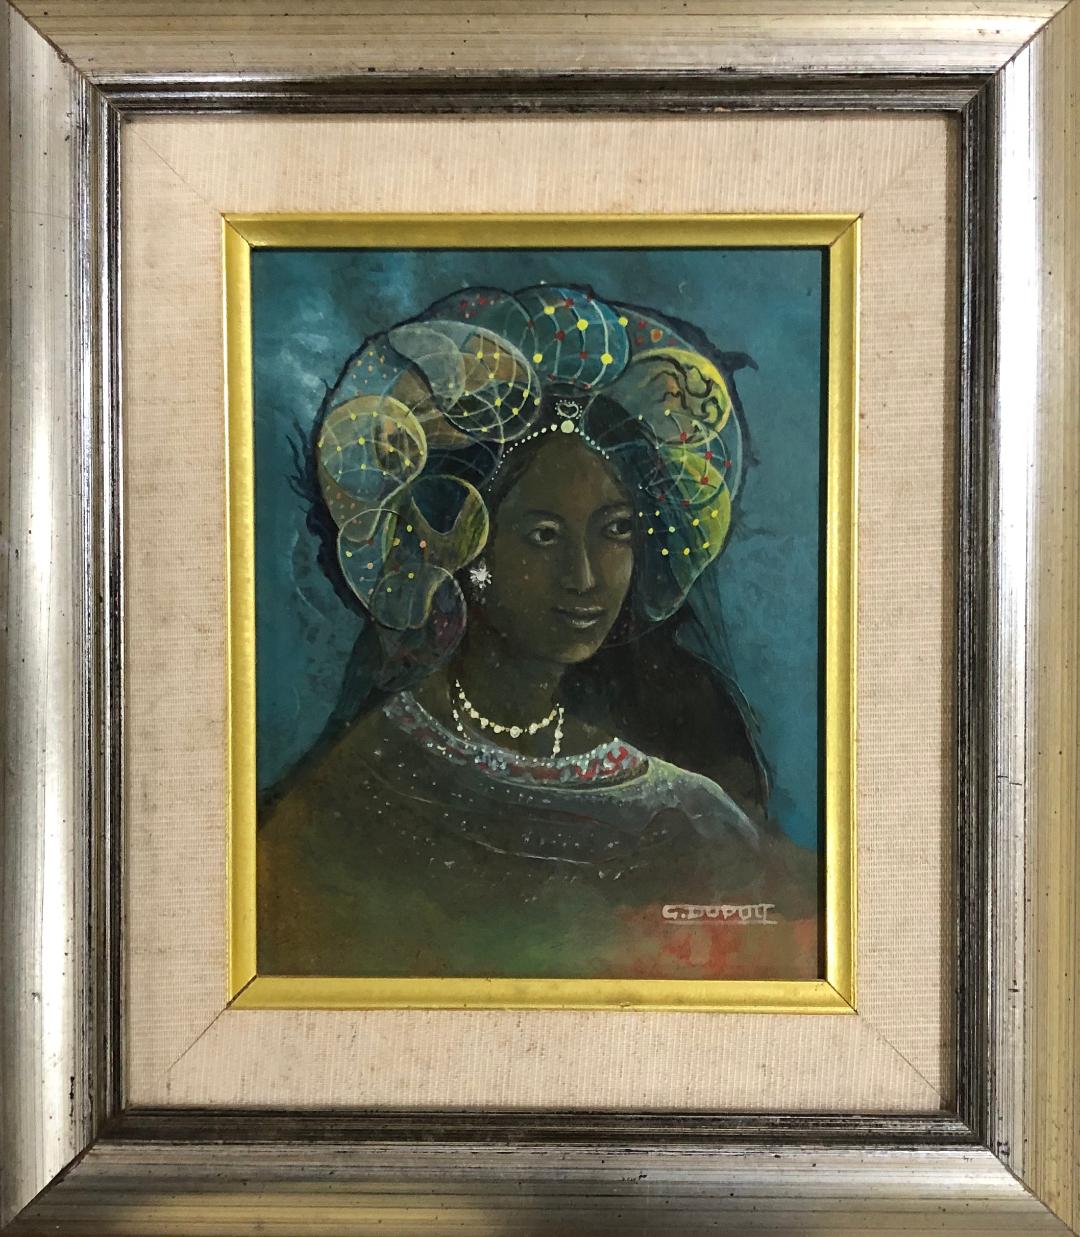 G. Dupuy 7"x6" Woman Portrait Oil on Masonite Framed#1FC